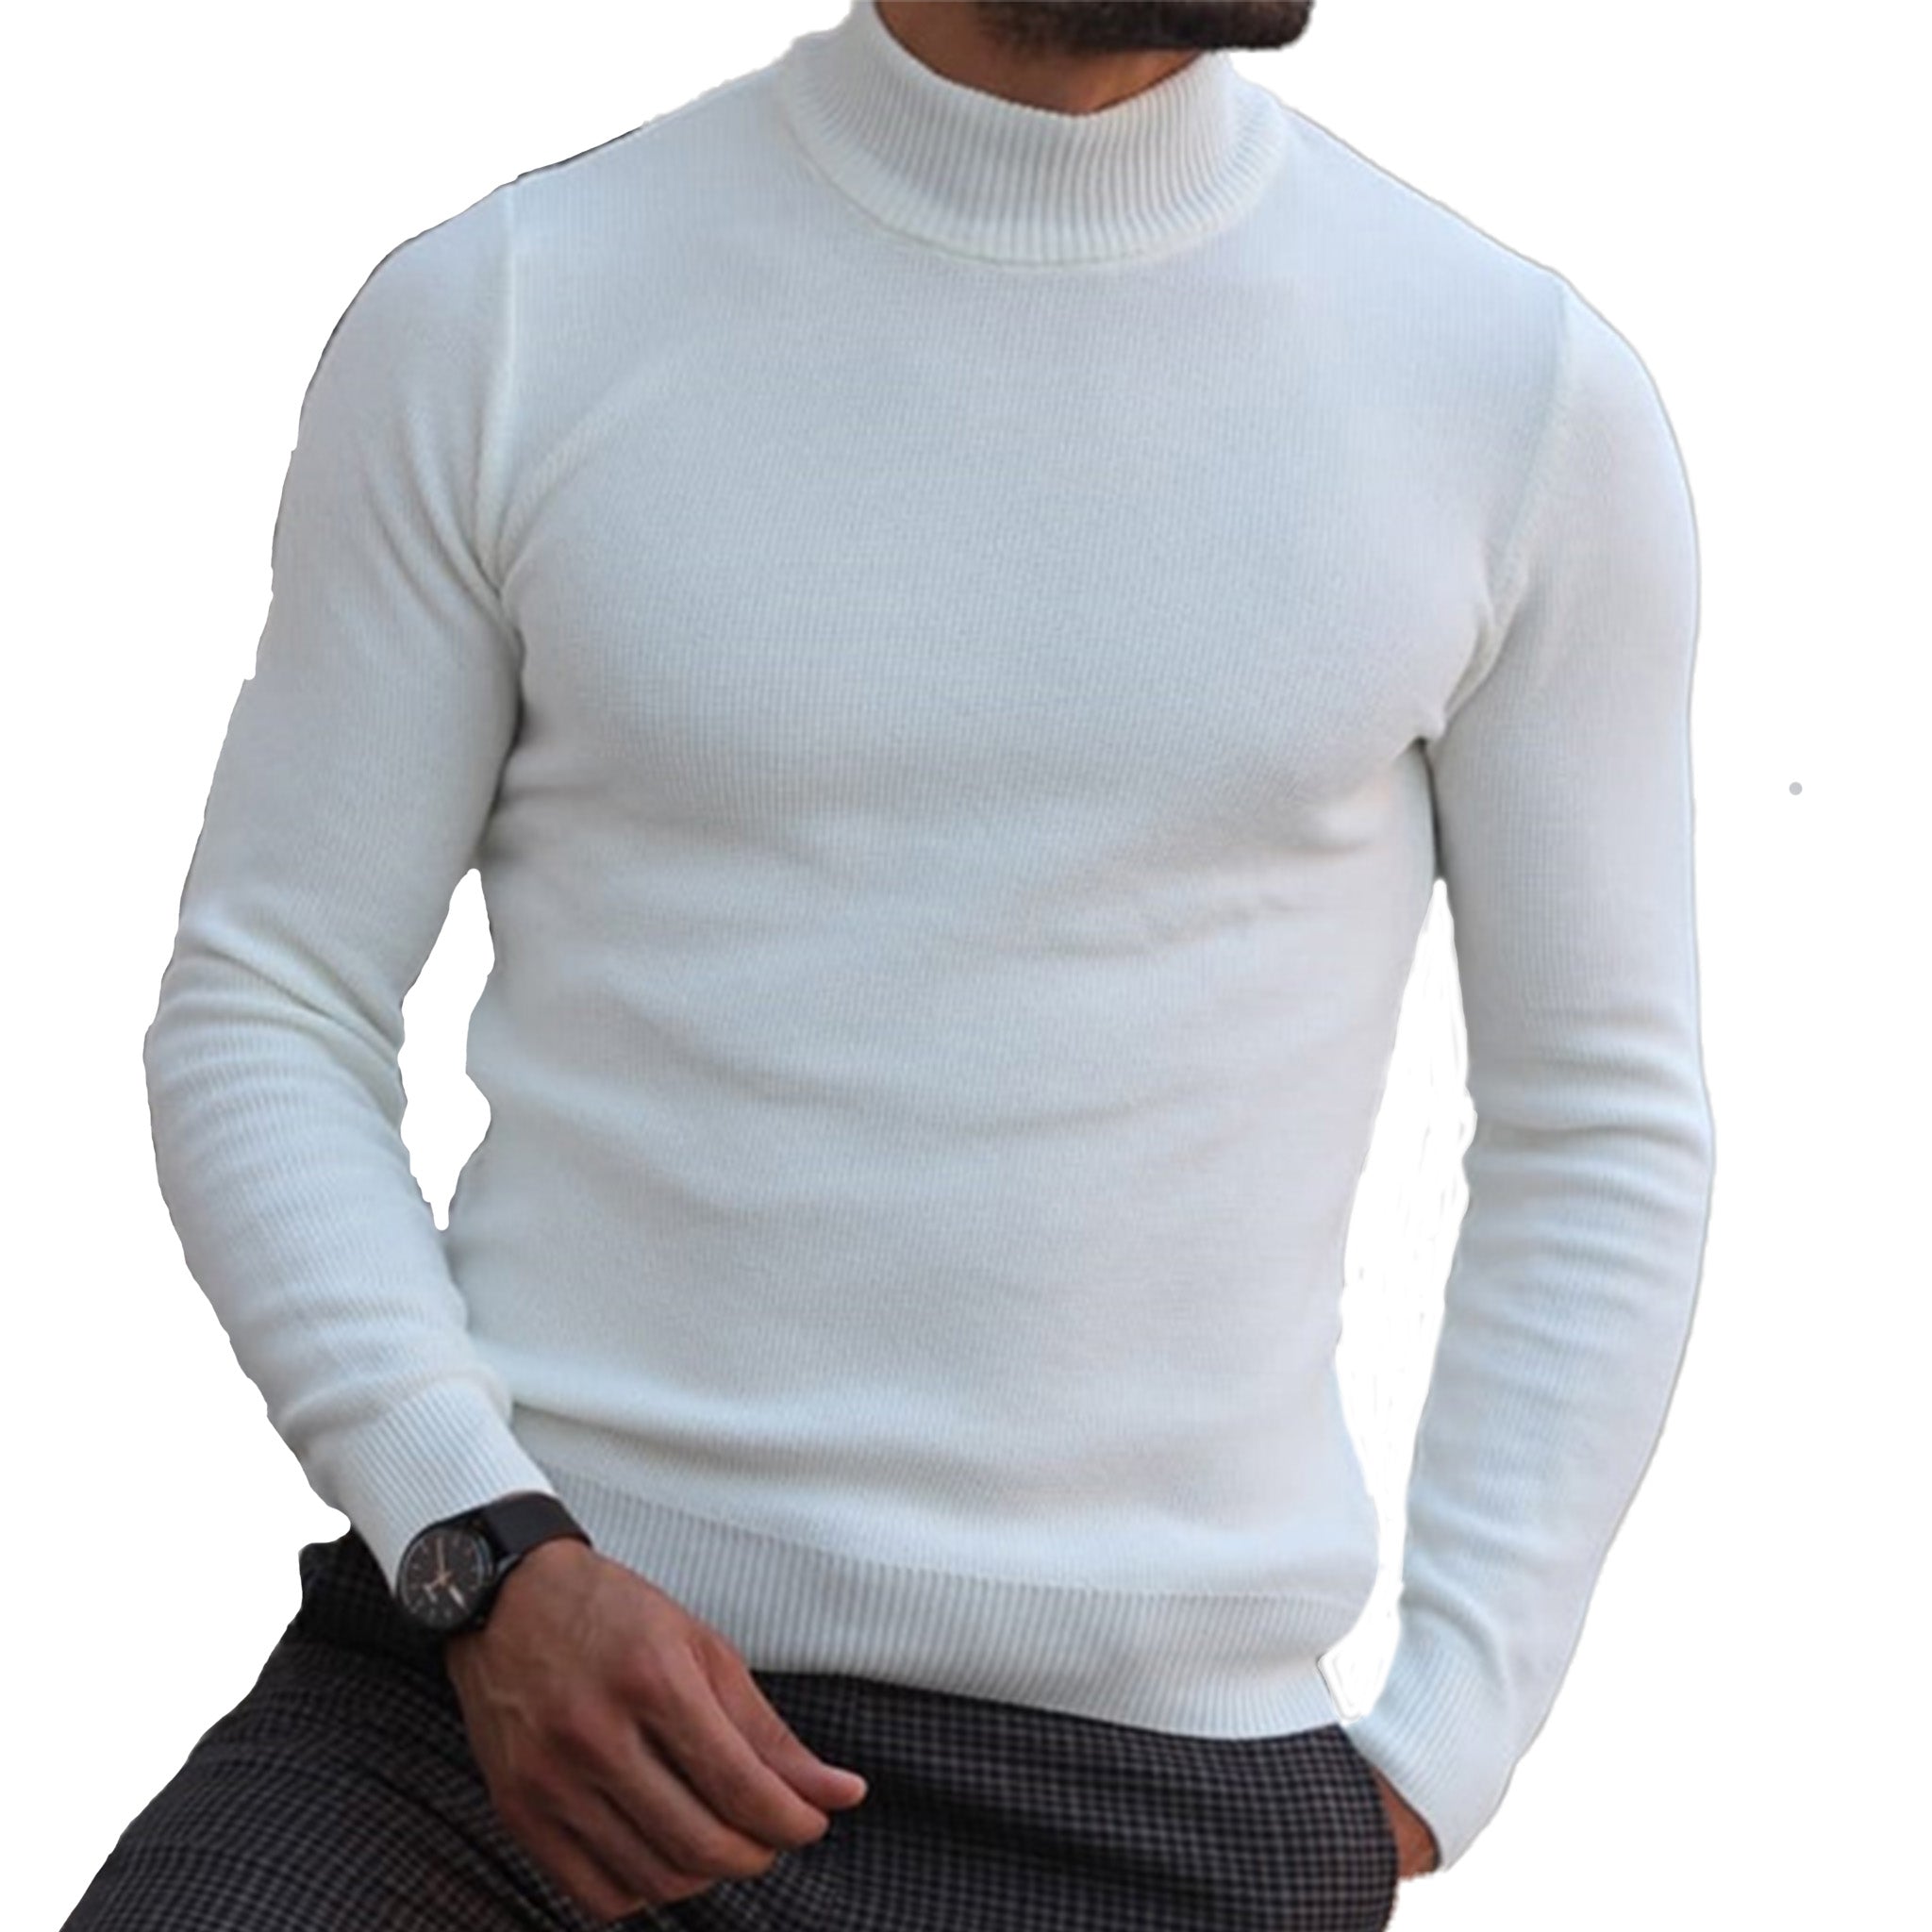 LONGBIDA Turtleneck T-Shirt Men Slim Fit Lightweight Long Sleeve Pullover  Top